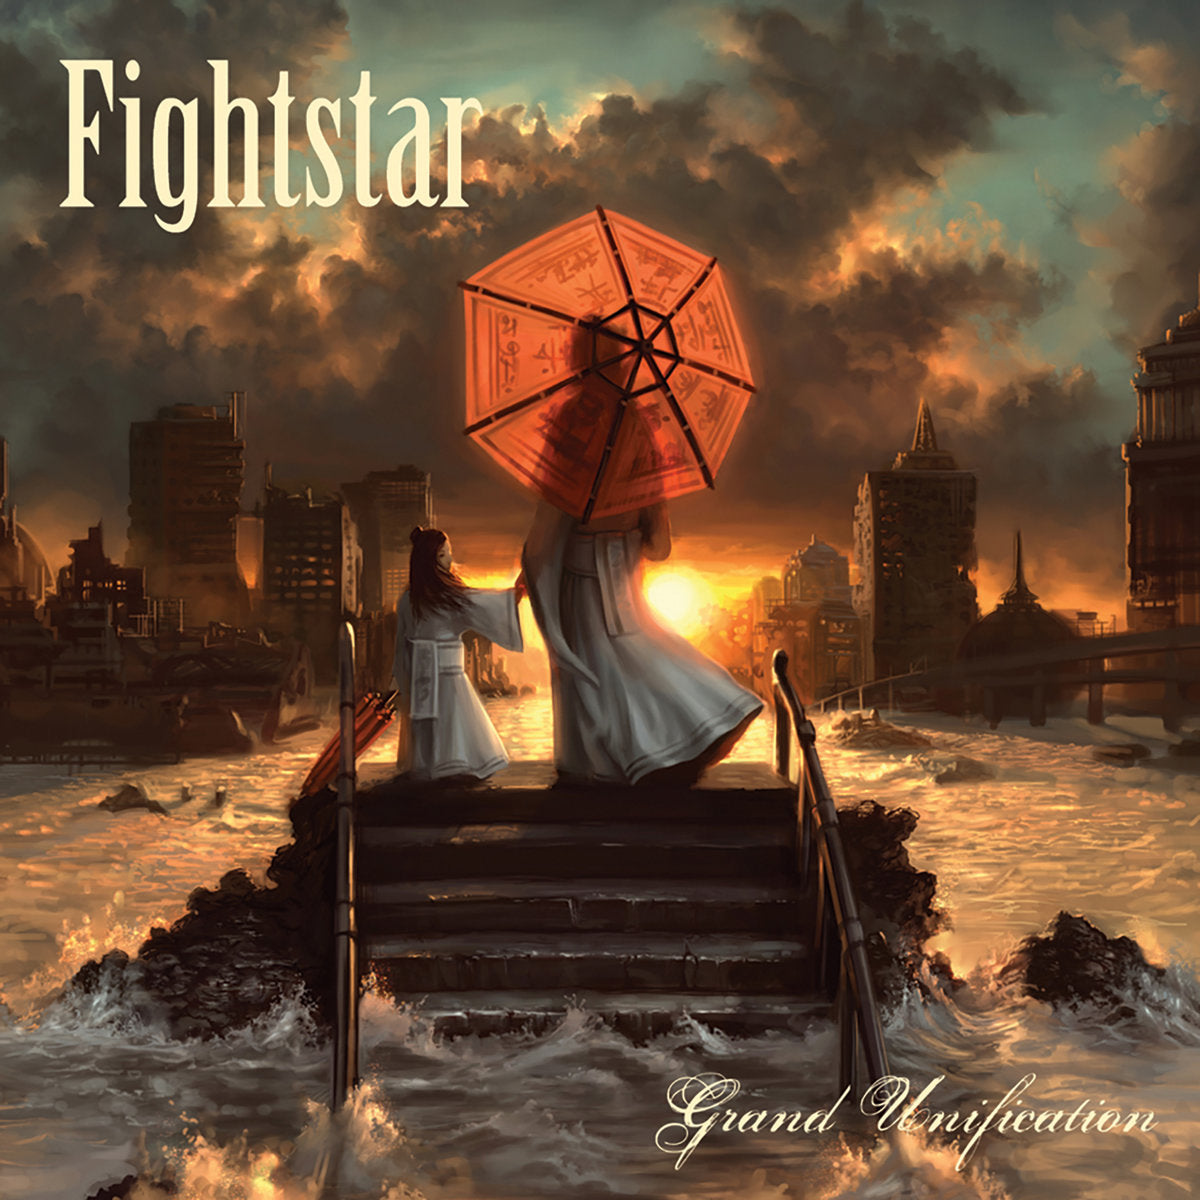 Fightstar "Grand Unification" CD